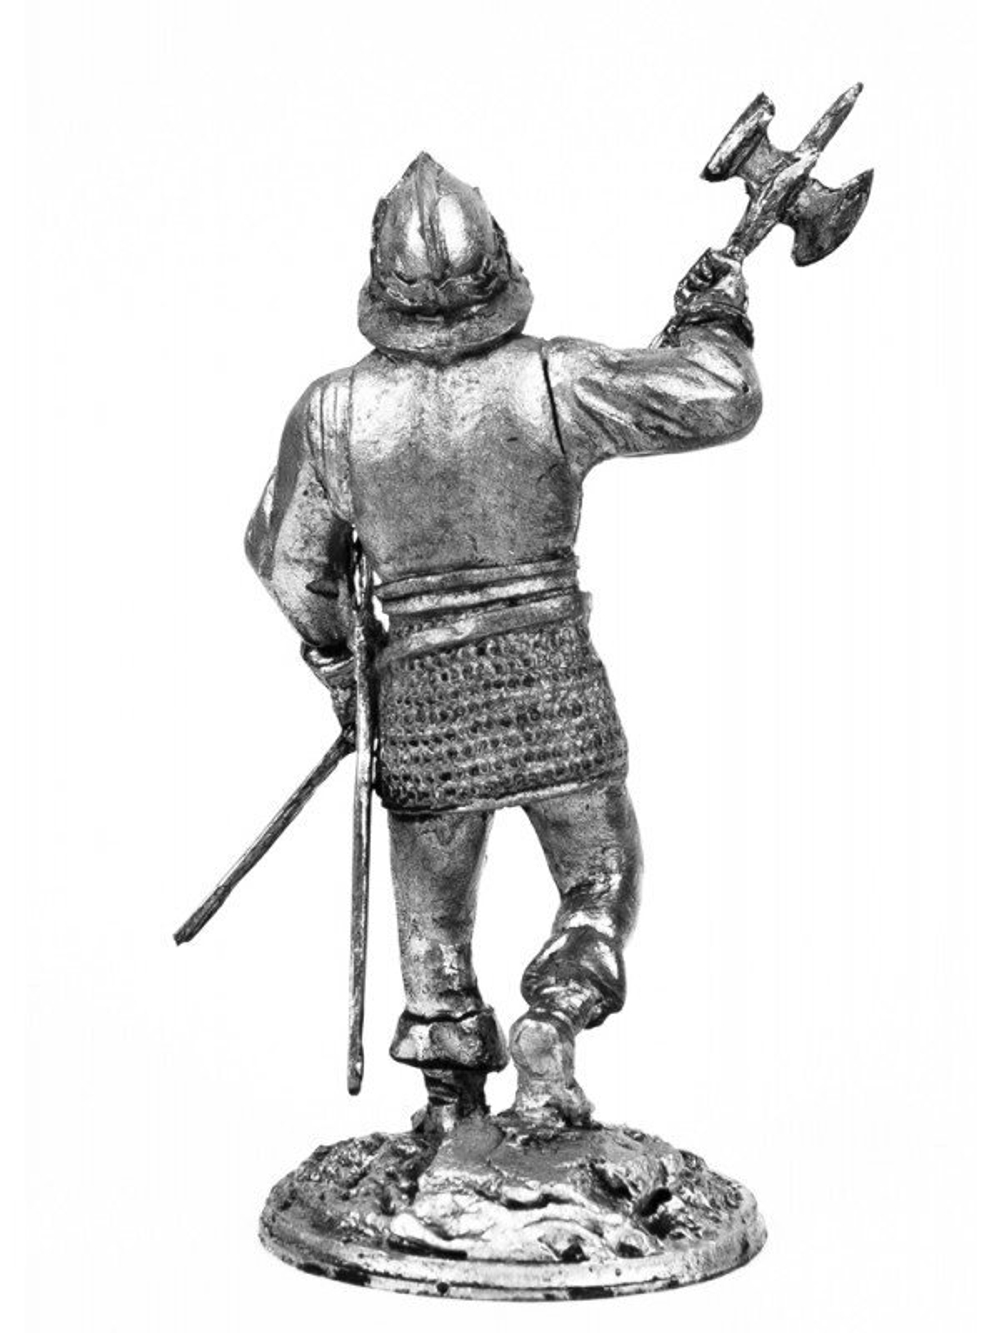 Оловянный солдатик пеший воин 1500 год